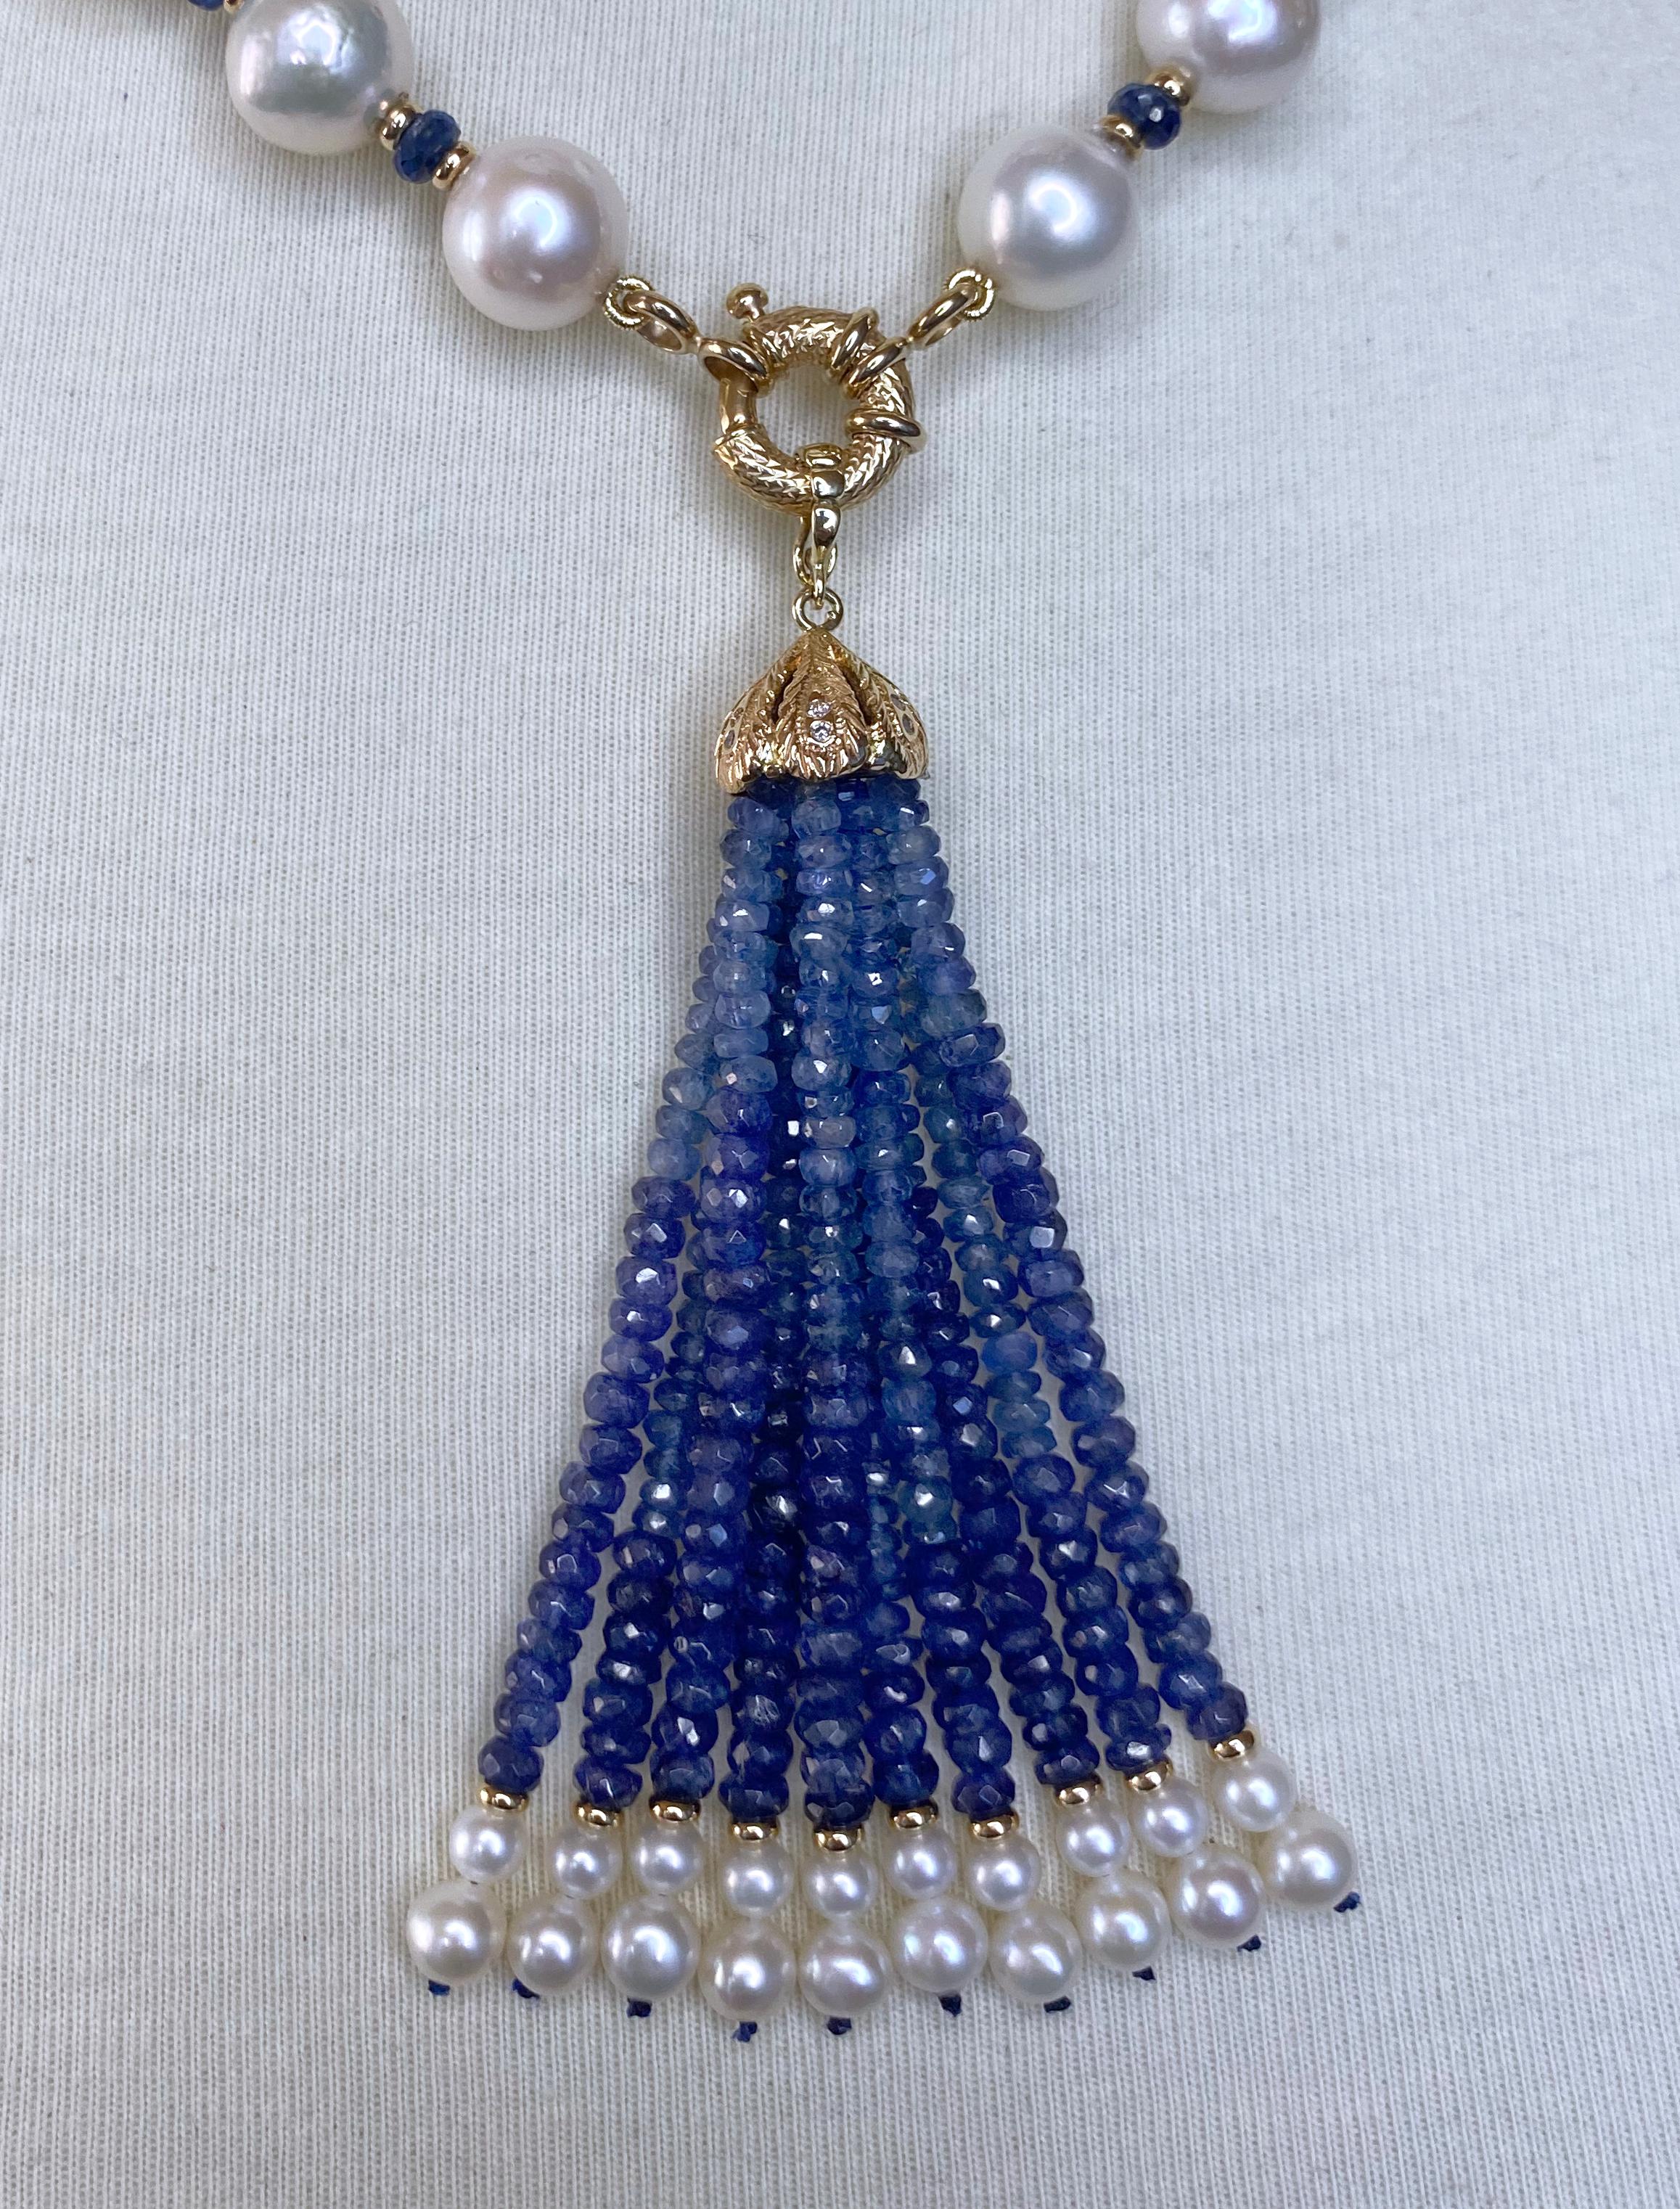 Marina J - Sautoir en or jaune 14 carats avec perles et saphirs bleus facettés 2